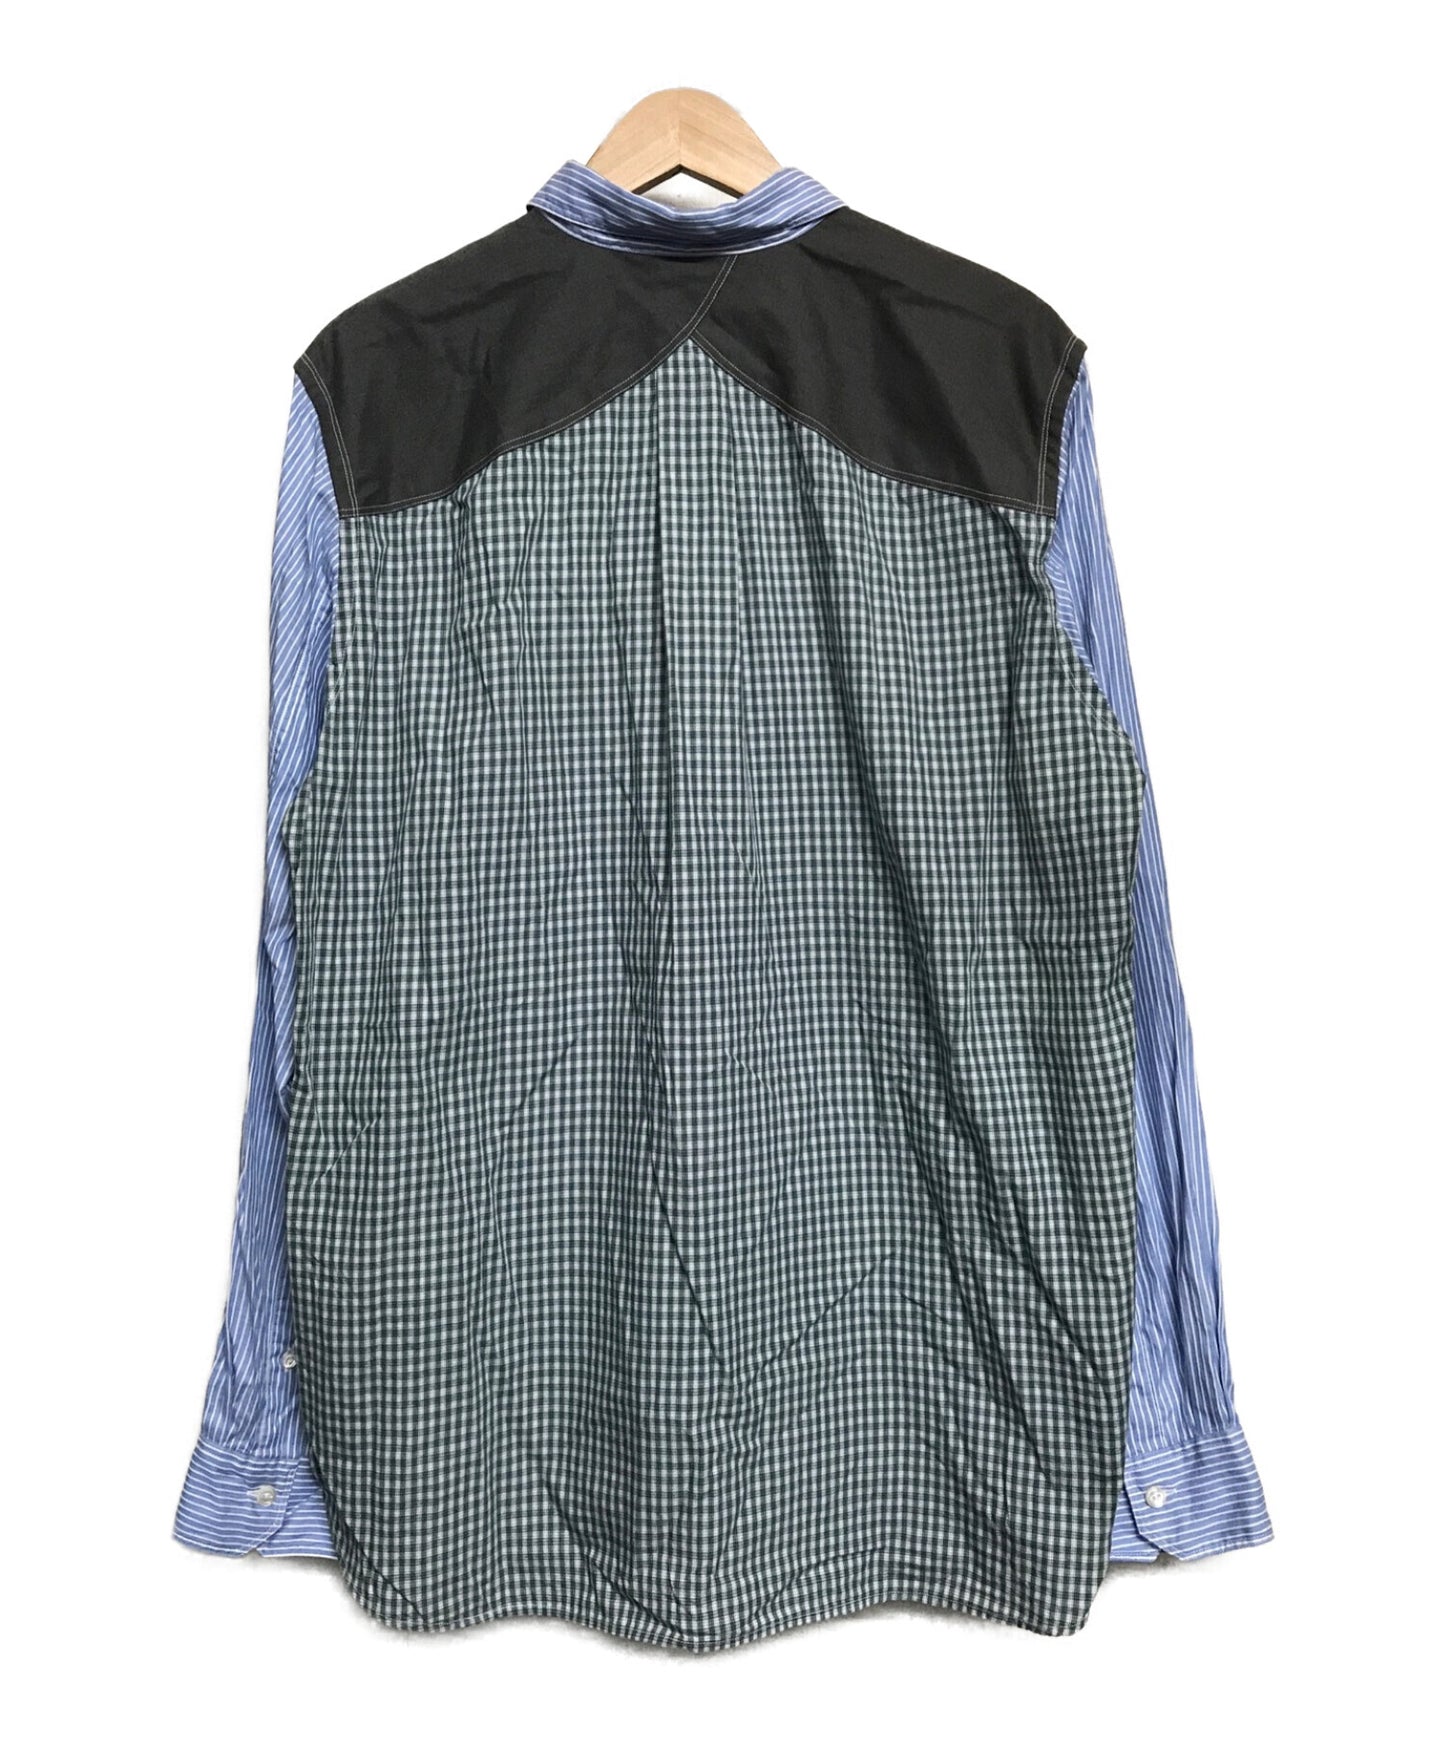 Comme des Garcons Junya Watanabe Man多物质条纹衬衫WF-B012